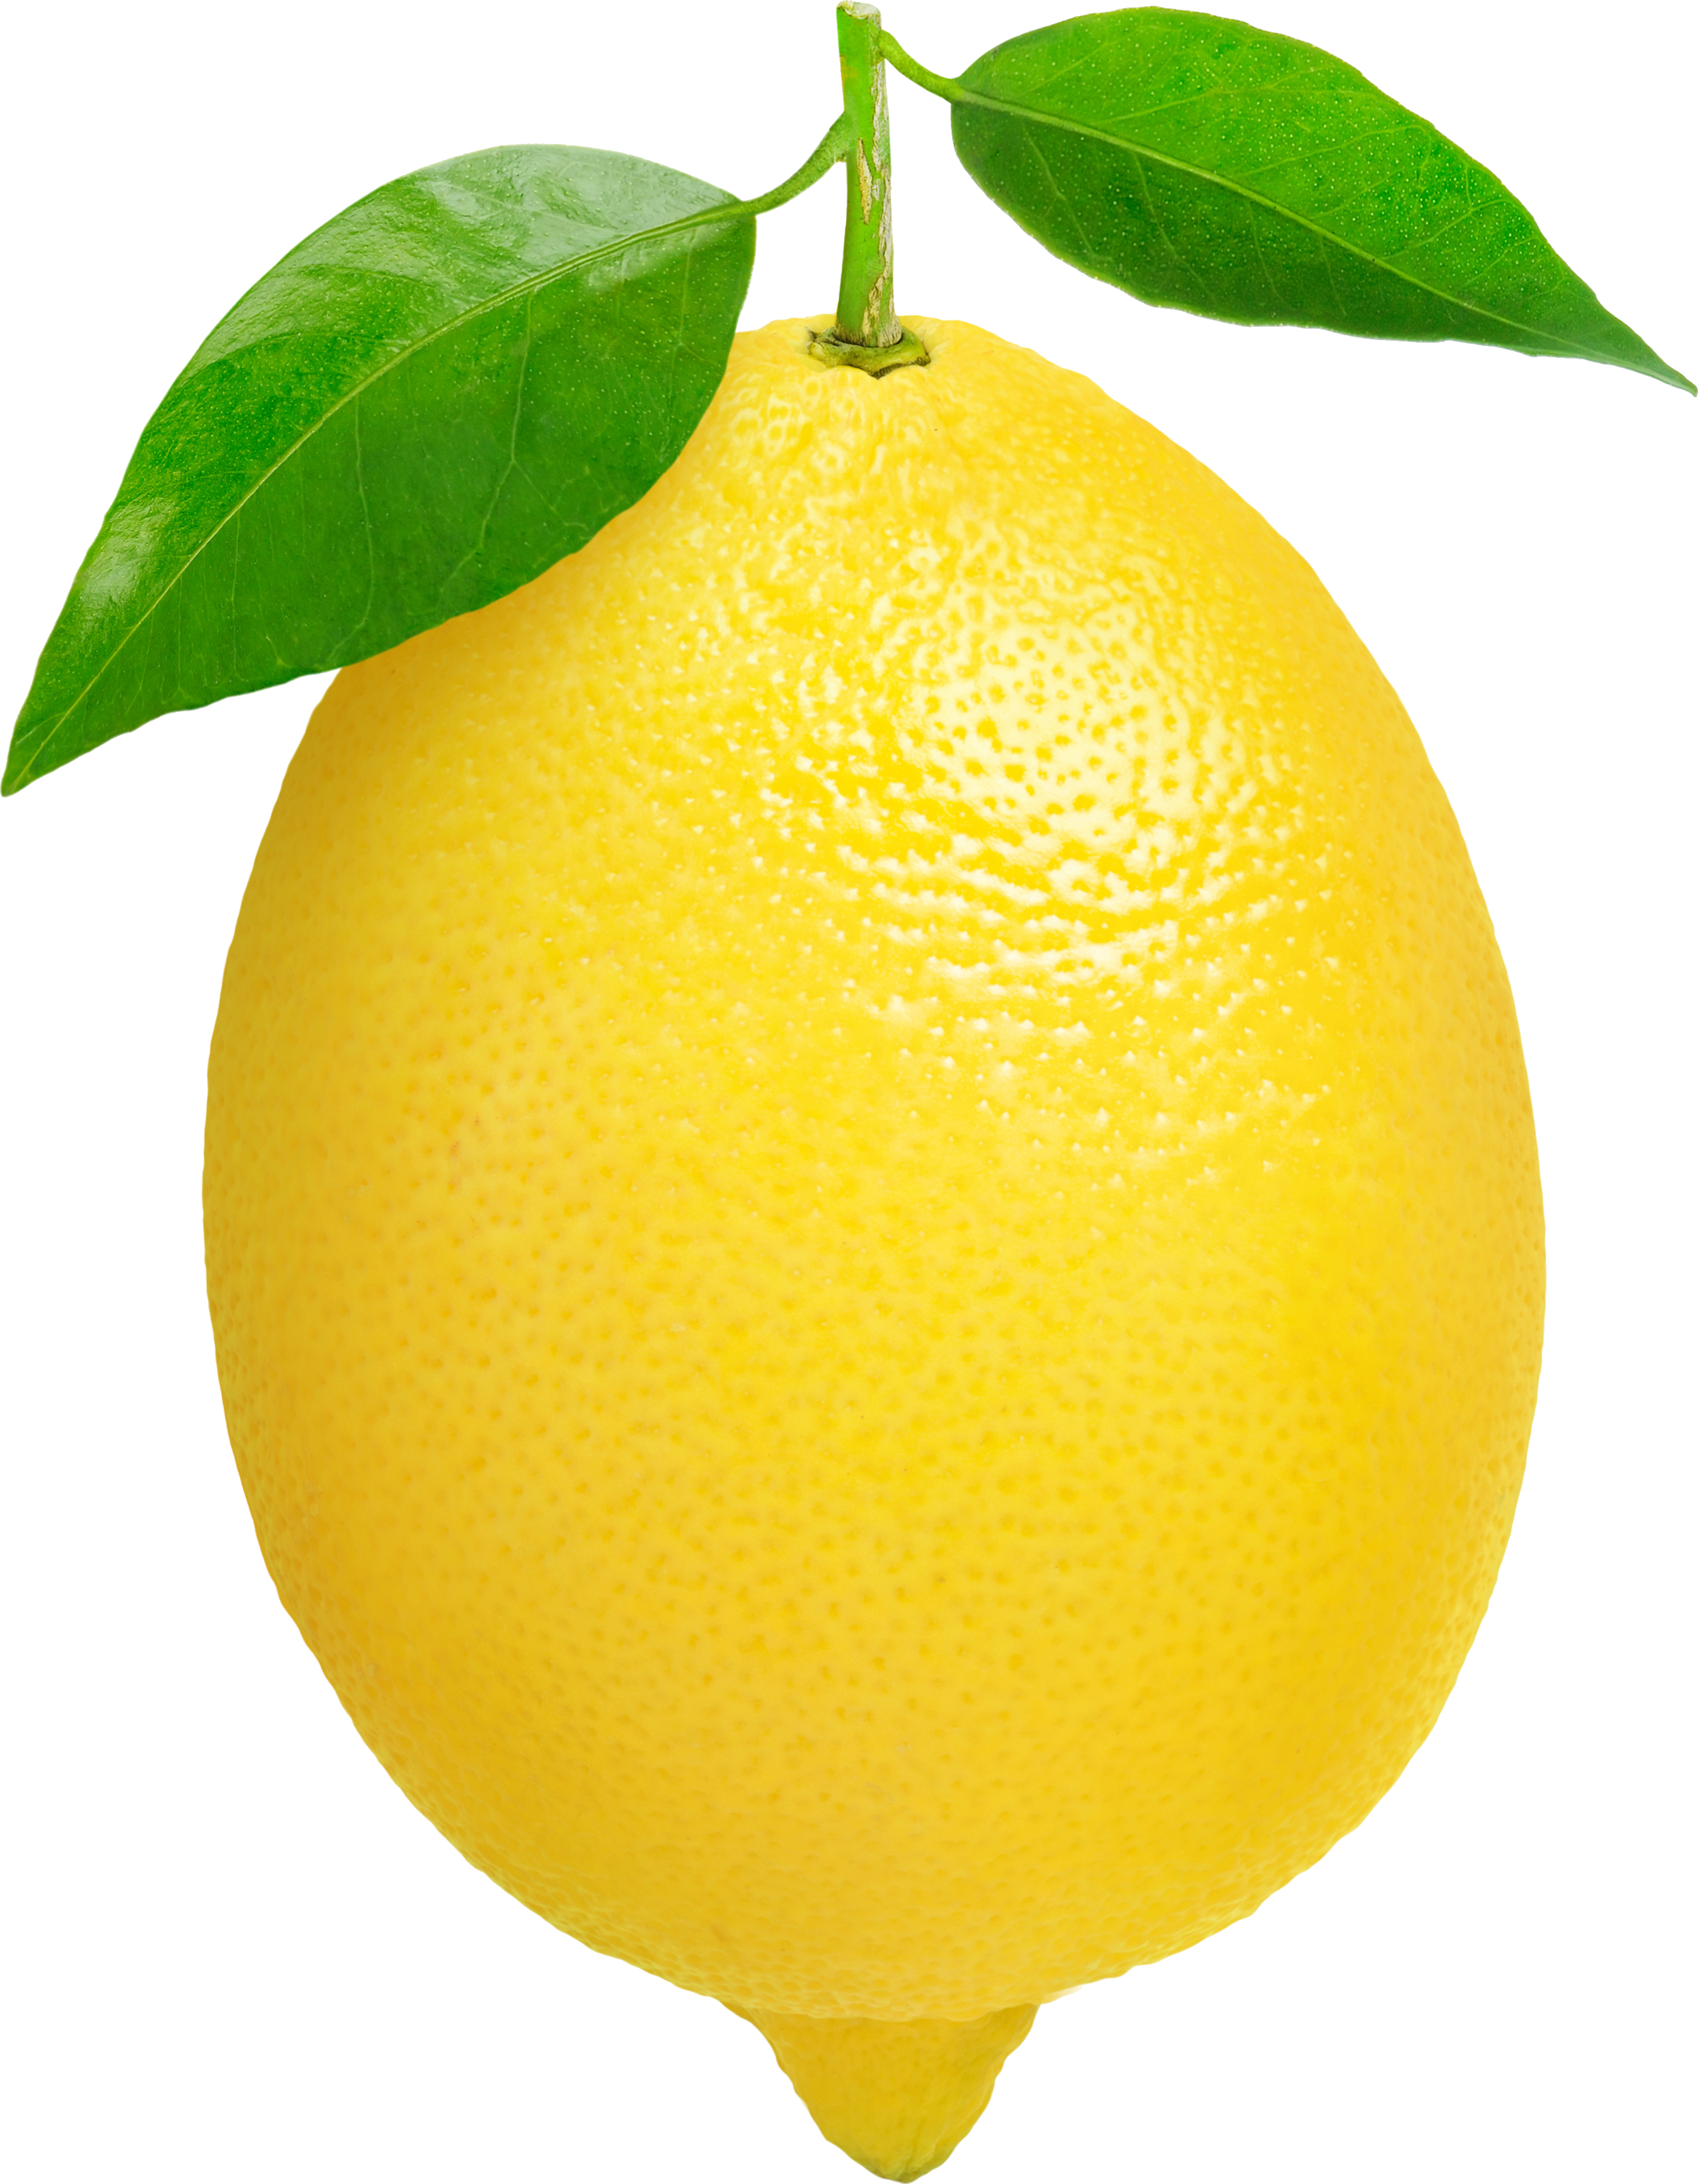 Free Lemon Transparent Background, Download Free Lemon Transparent ...